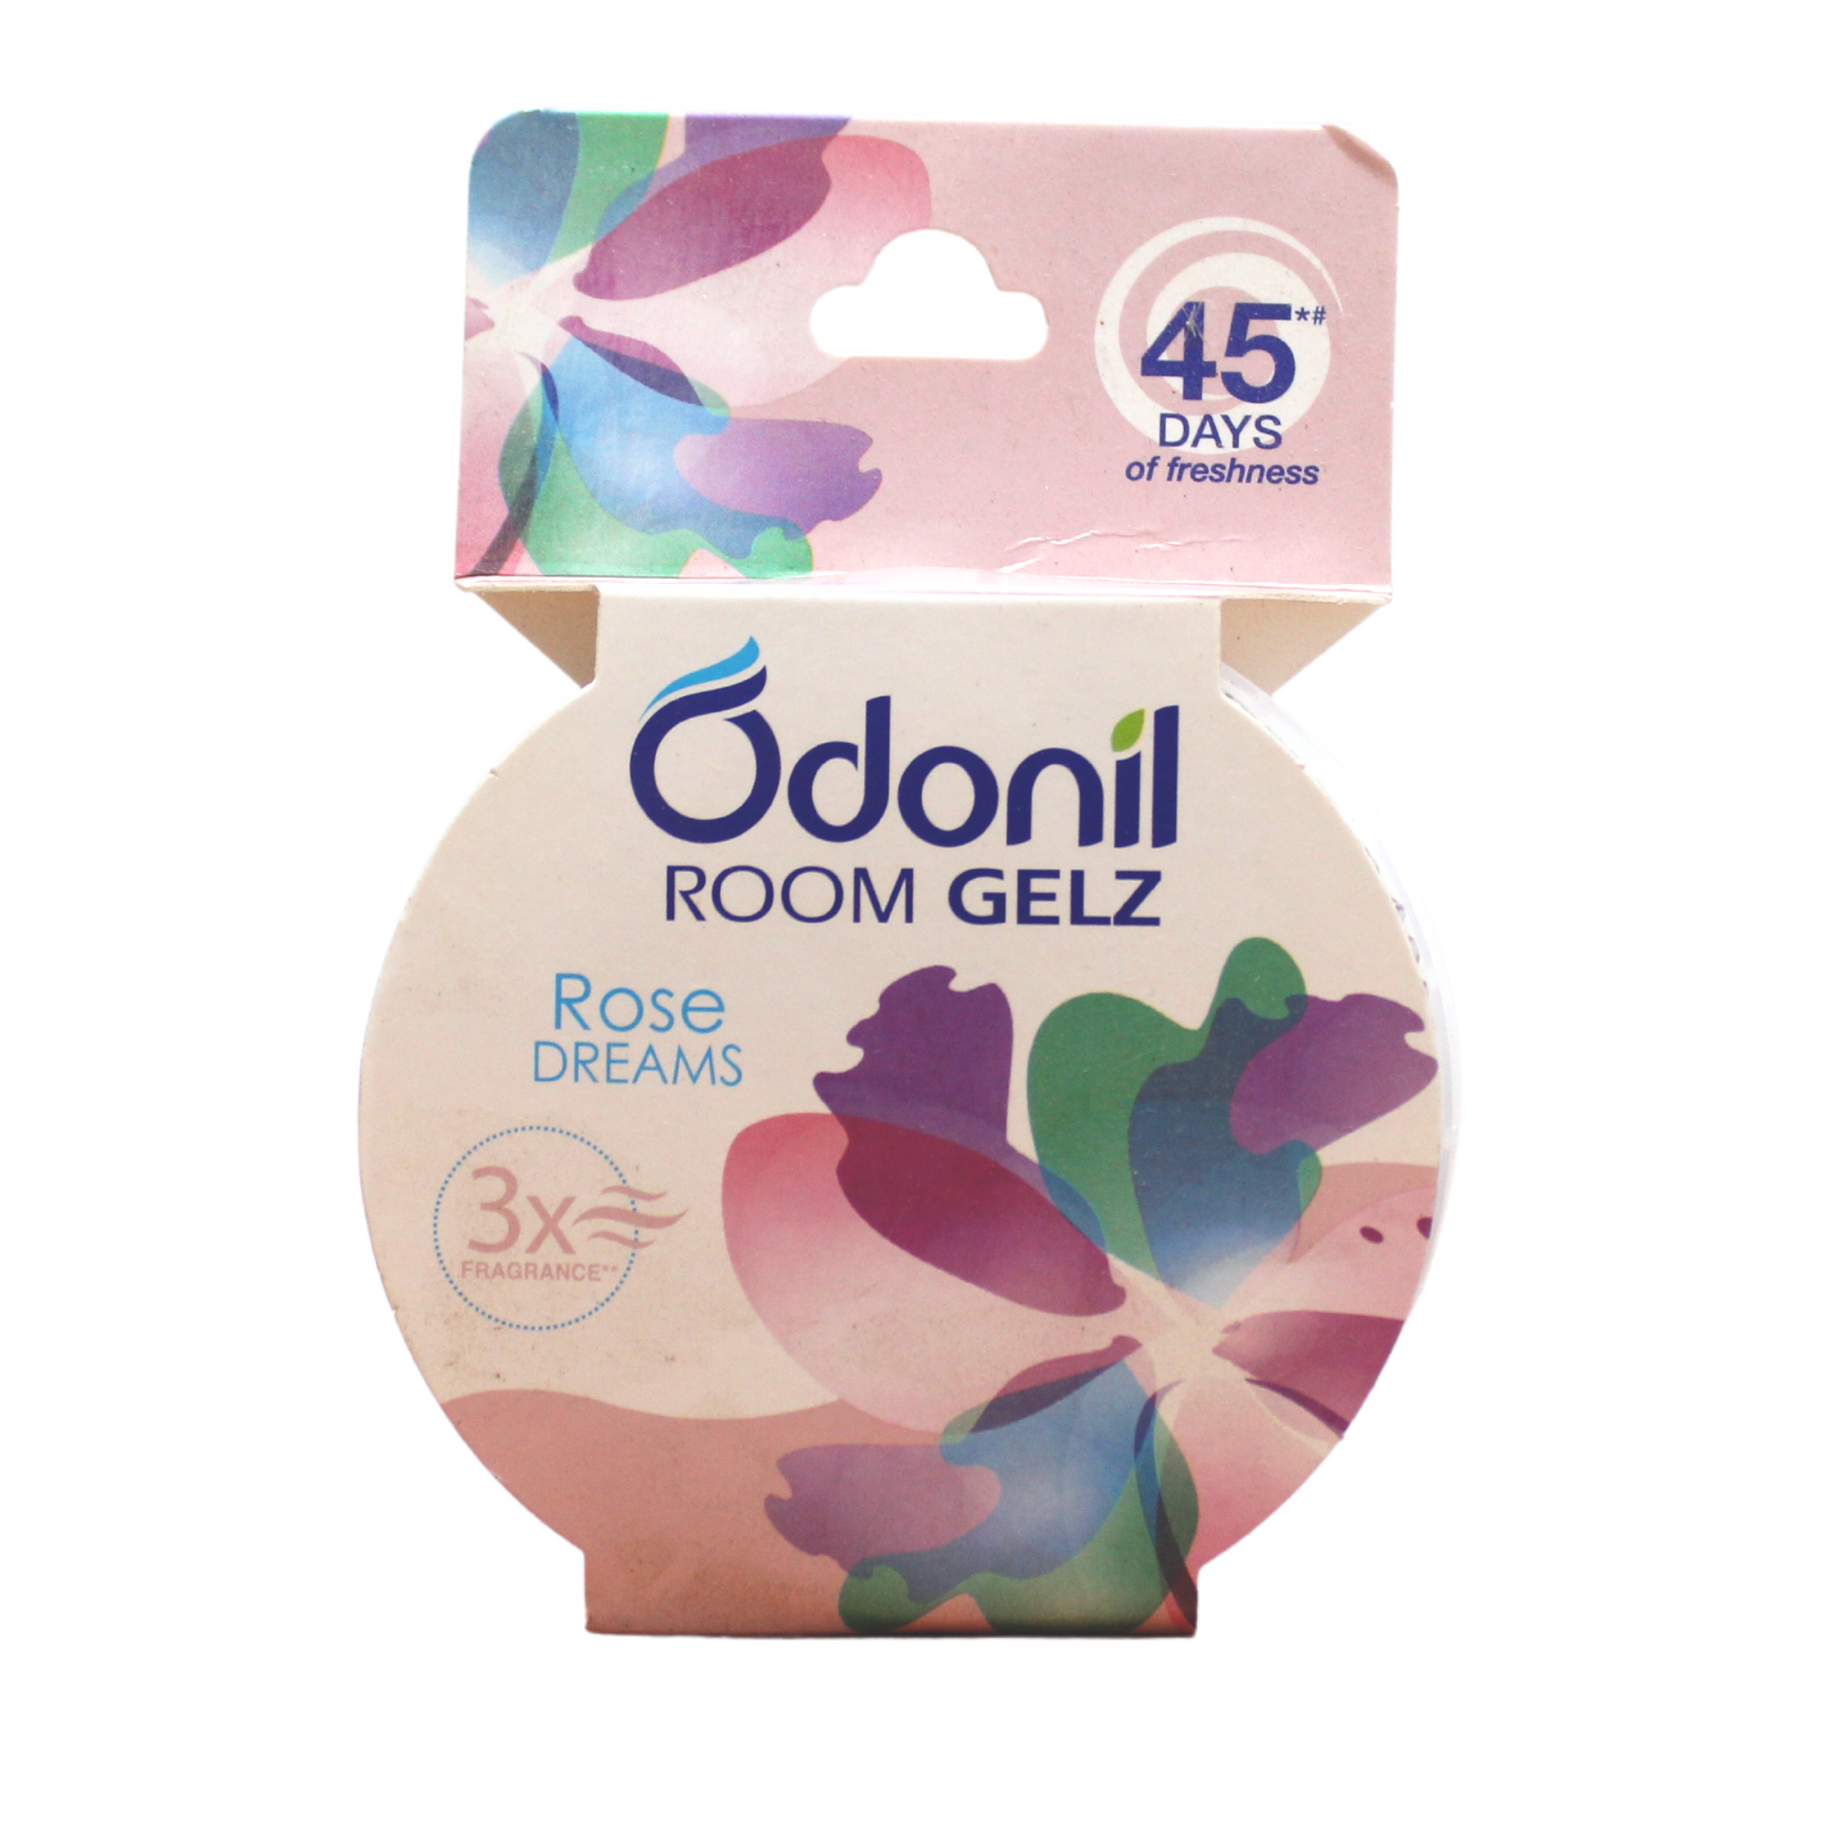 Shop Odonil Room Gelz 75gm - Rose dreams at price 80.00 from Dabur Online - Ayush Care